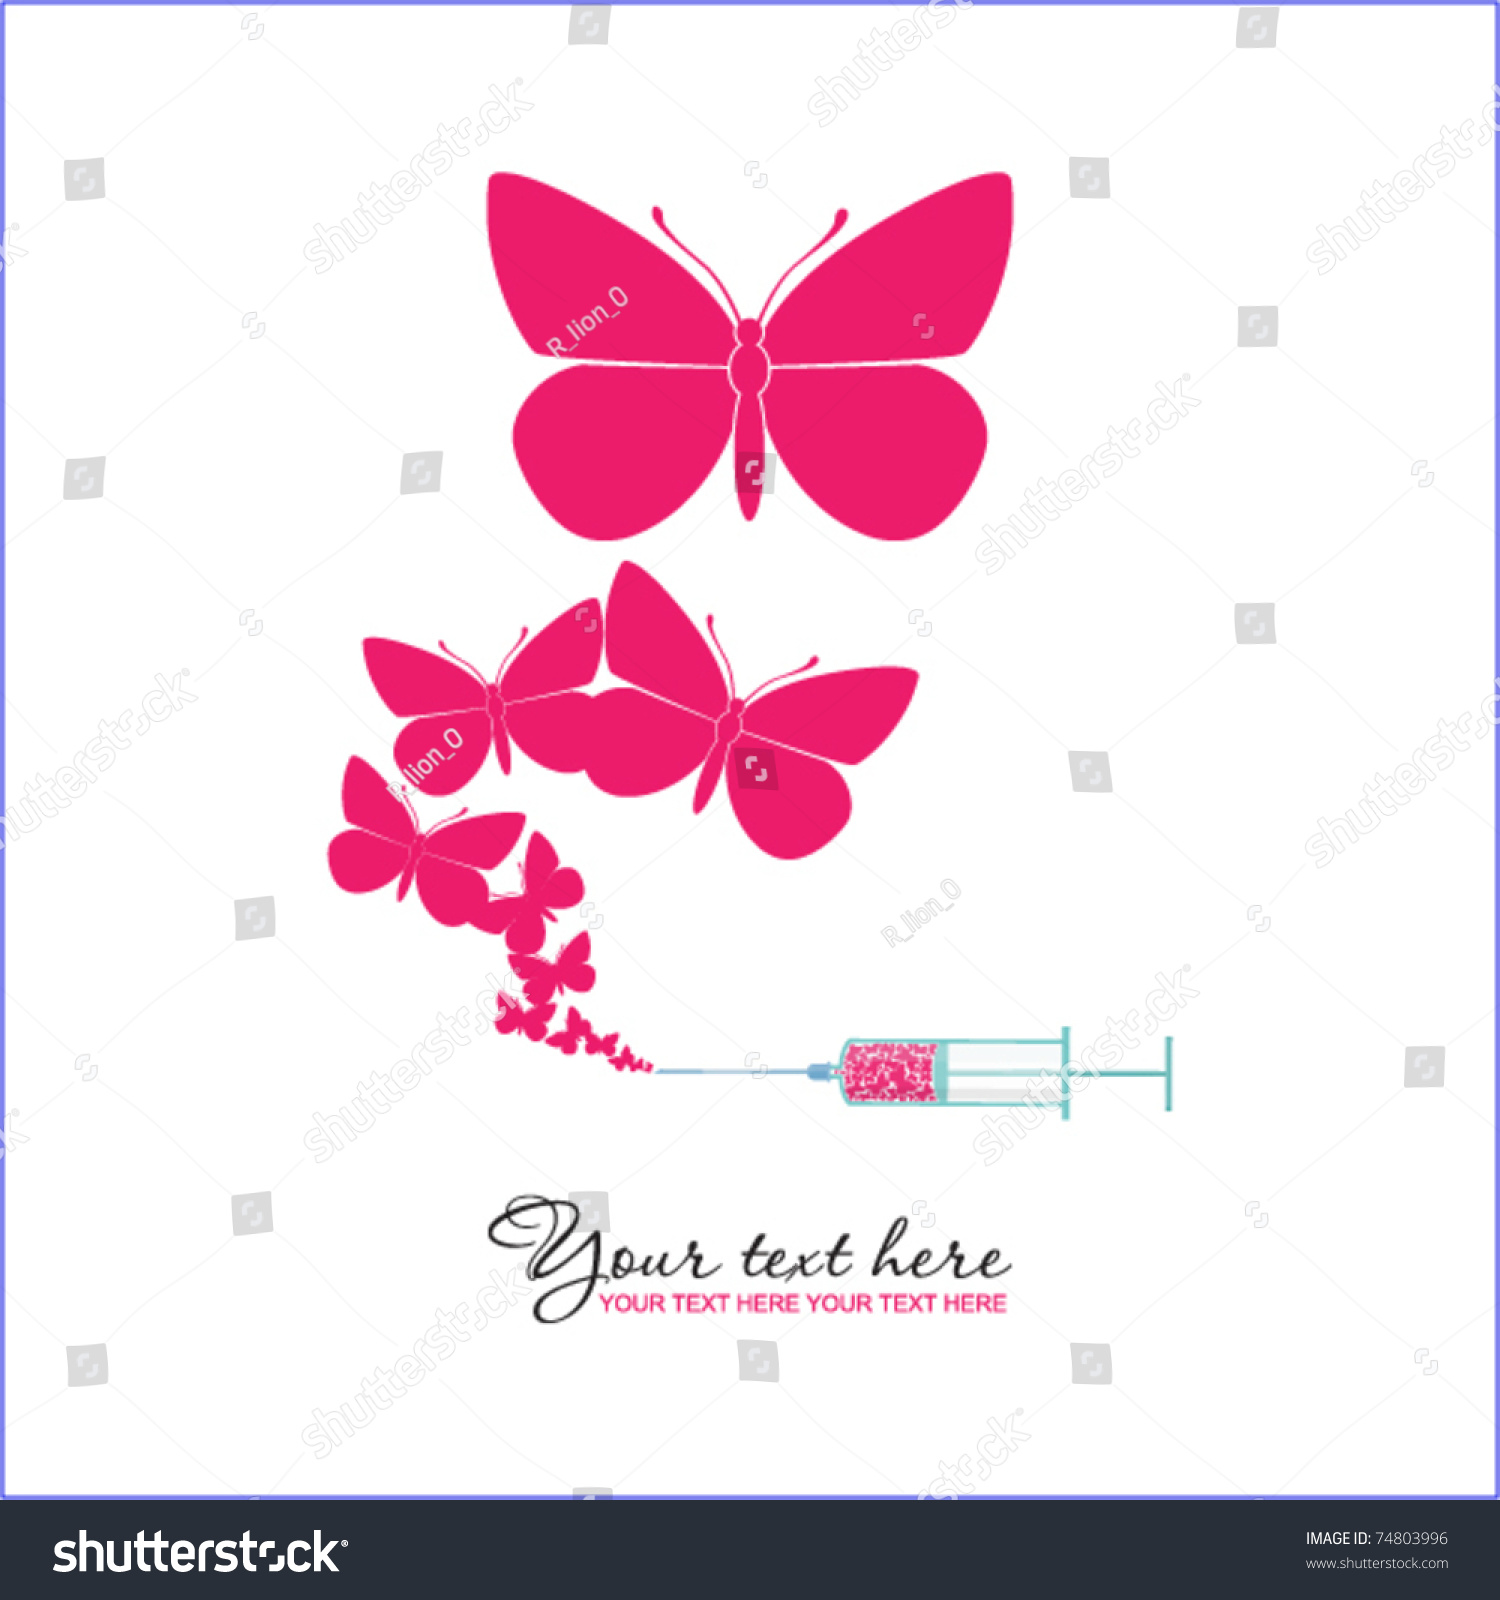 Download Syringe Butterfly Vector Illustration 3 Stock Vector ...